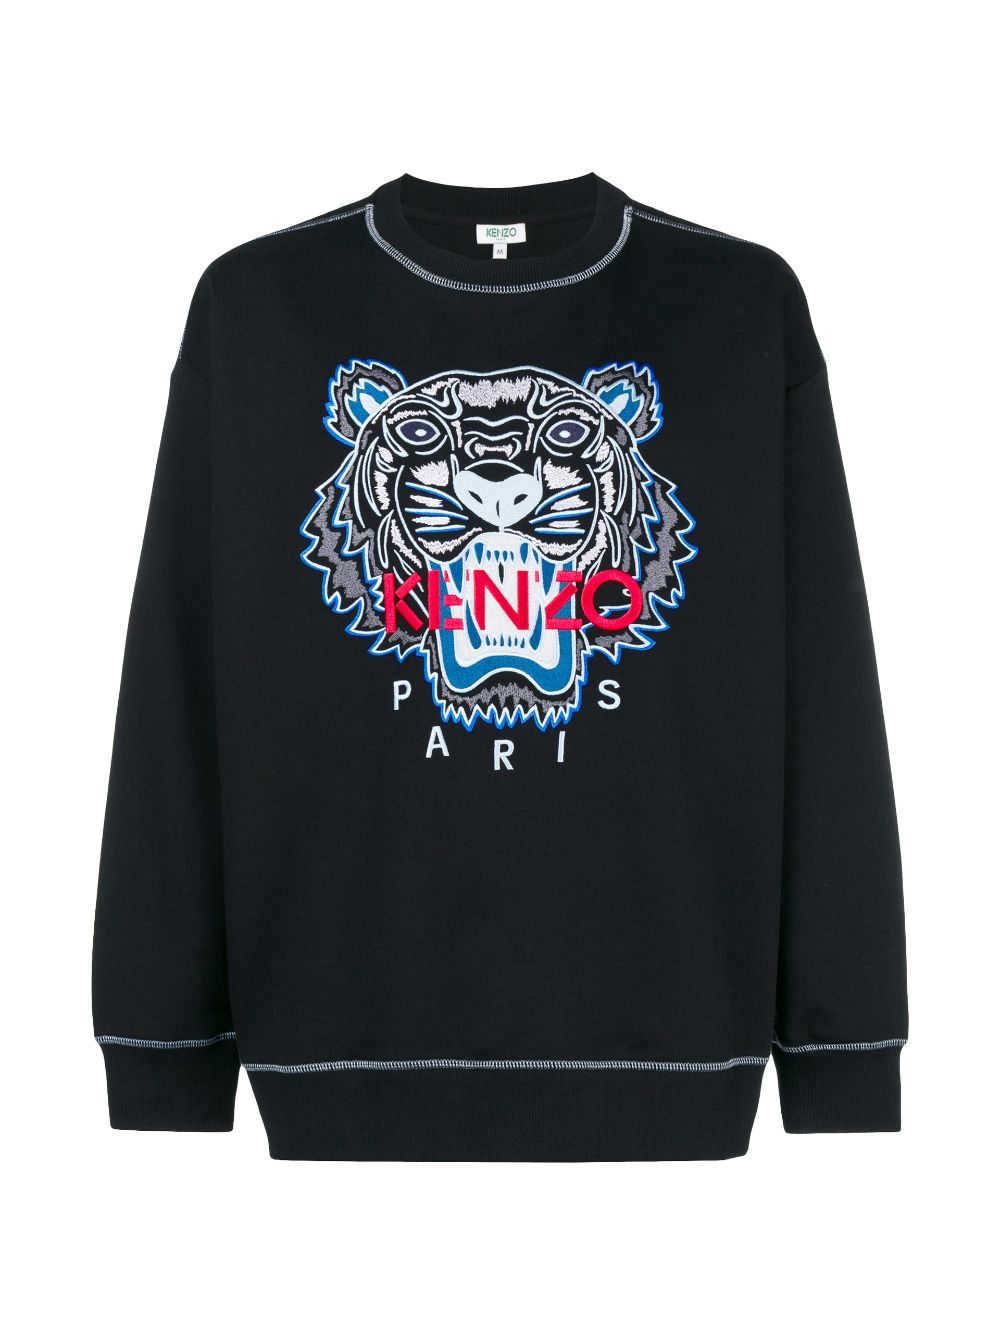 Brand New Kenzo Tiger Embroidery Sweatshirt, Size Small, Black